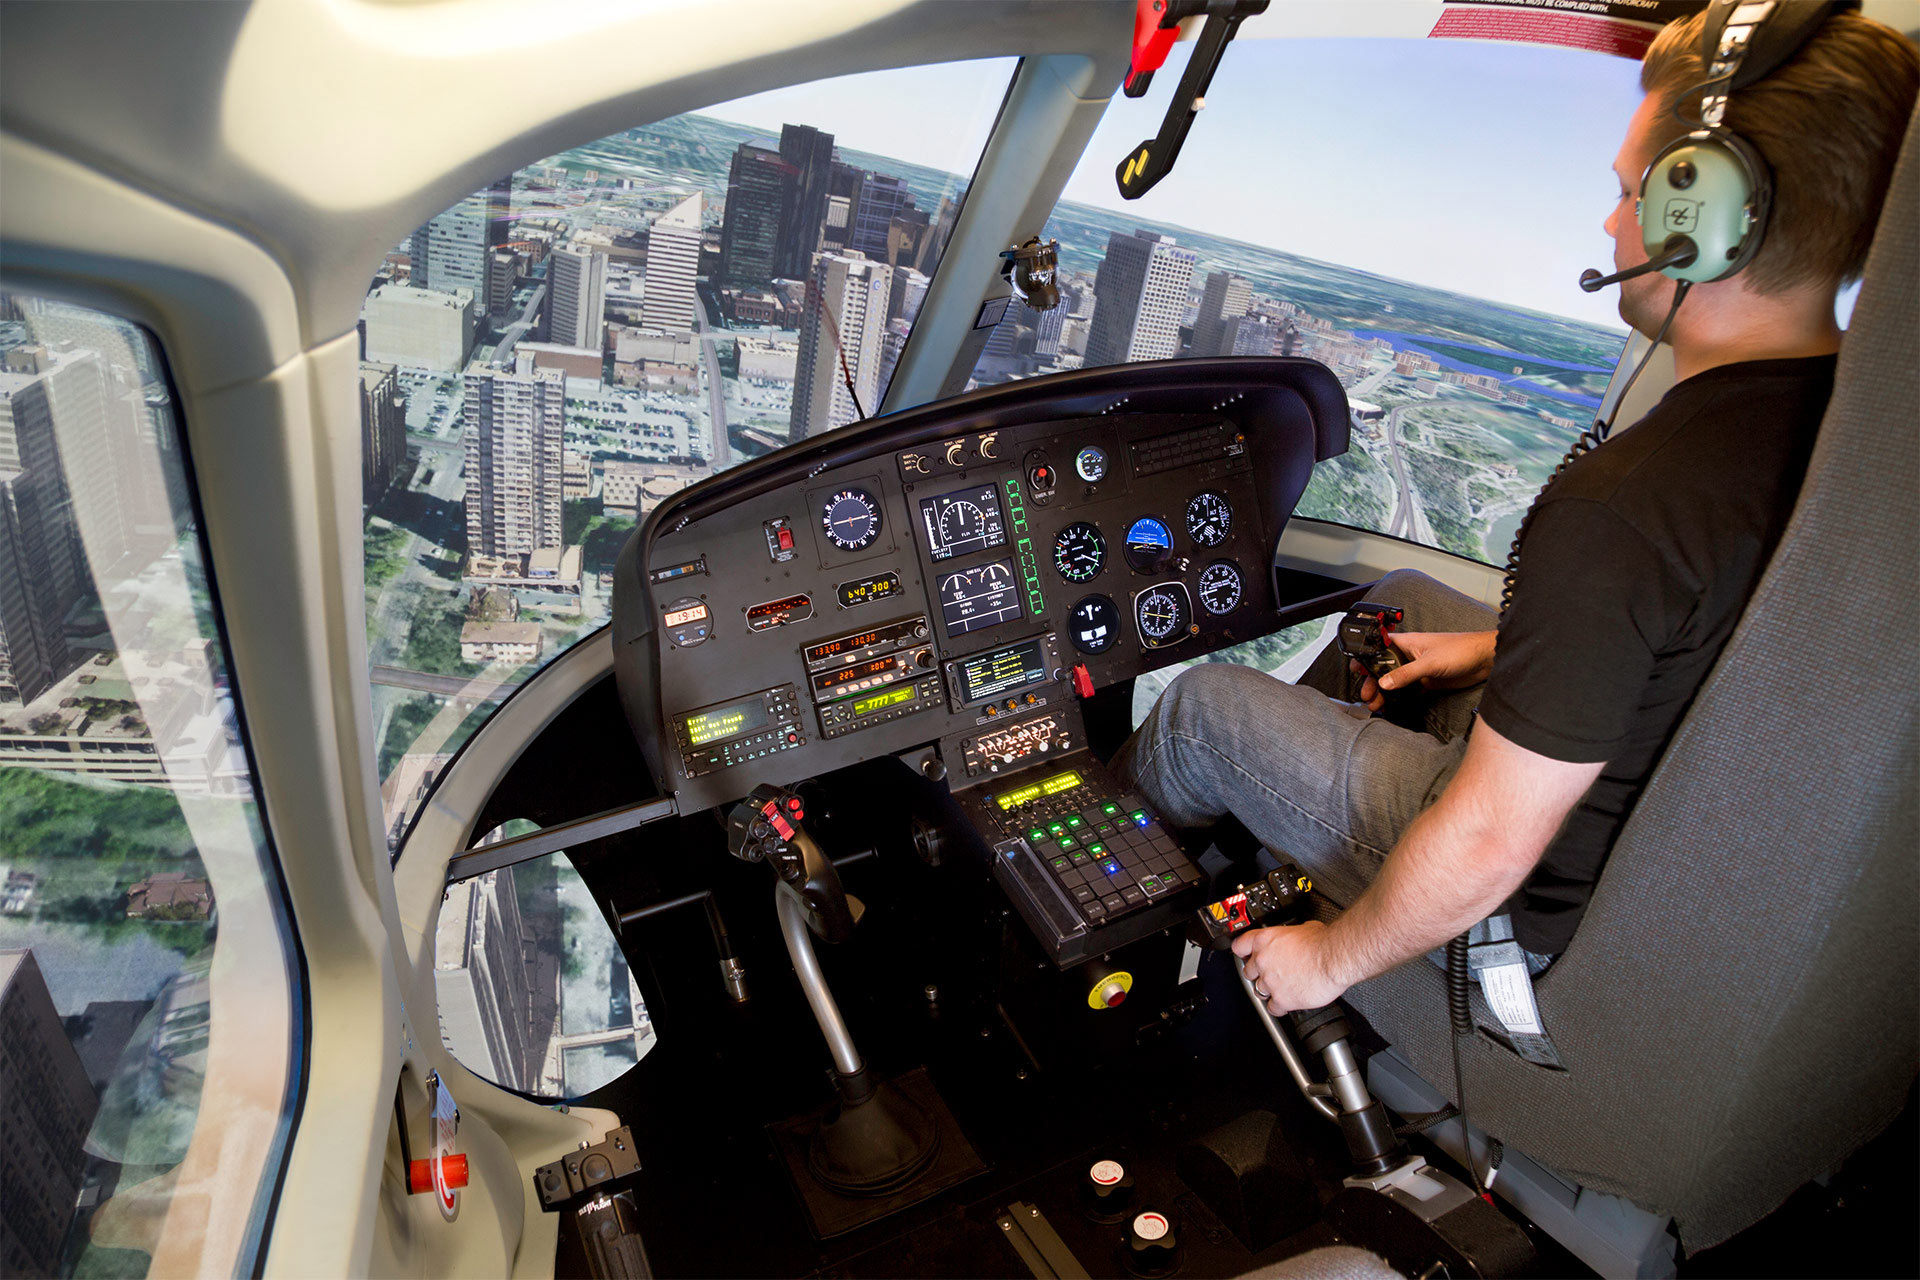 free instal Airplane Flight Pilot Simulator